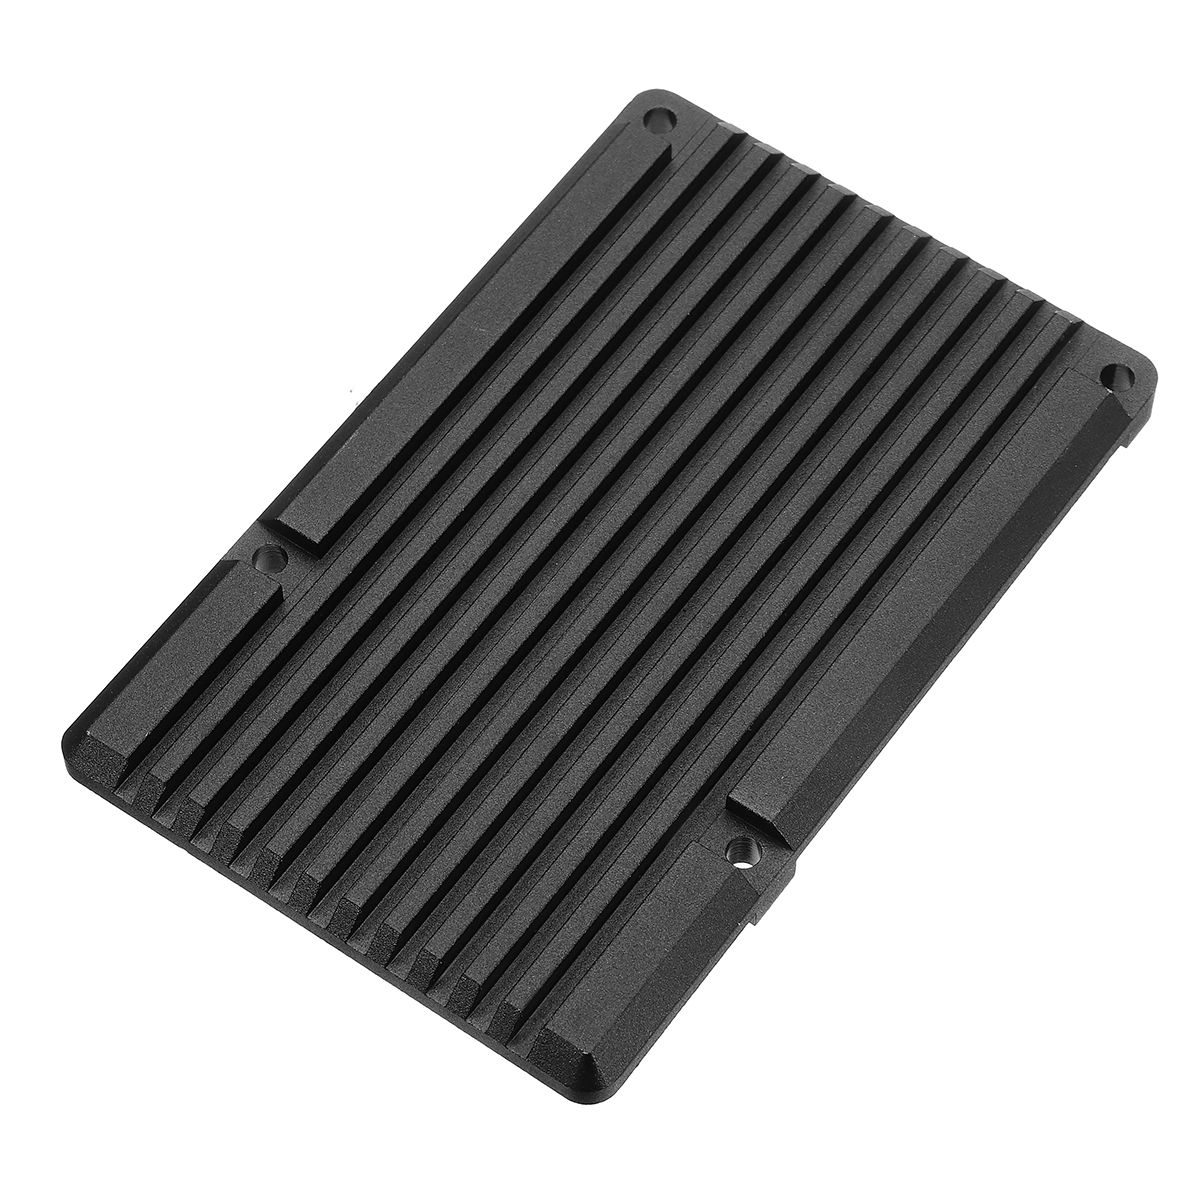 Black-Aluminum-Alloy-Protective-Shell-Metal-Case-Built-in-Heatsink-for-Raspberry-Pi-3B-3B-1634770